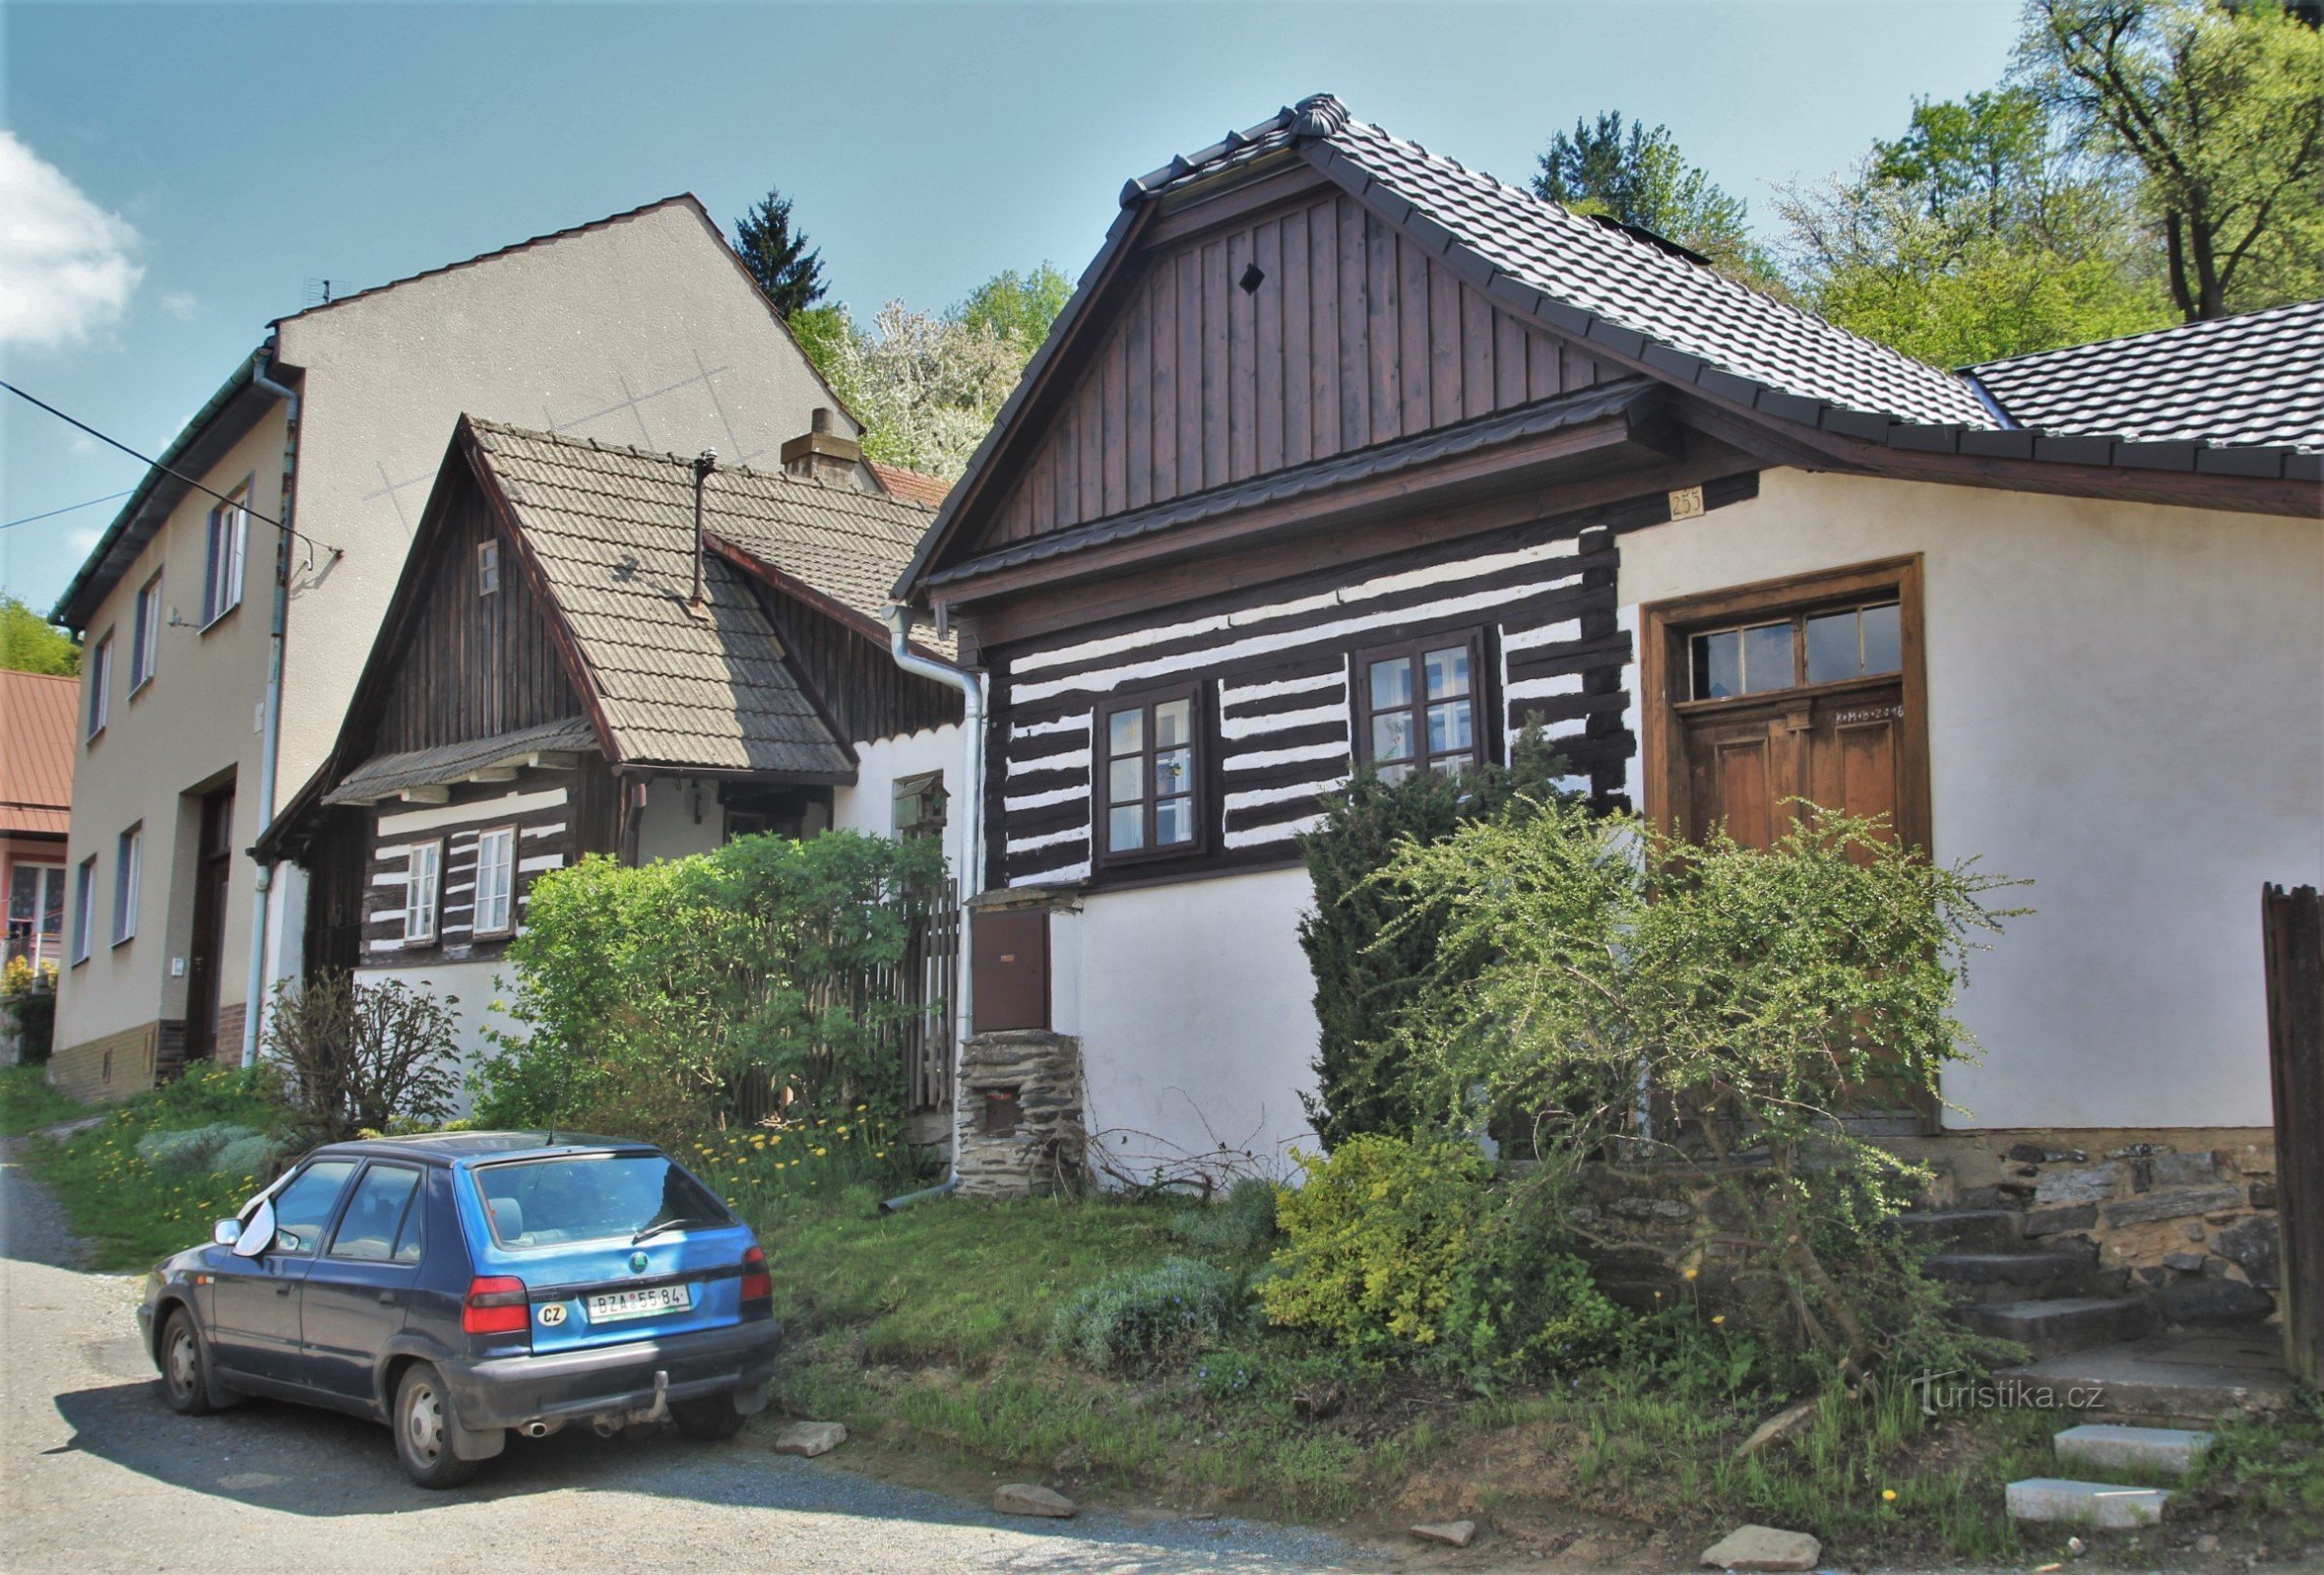 Olešnice - Horní Vejpustek の木造住宅